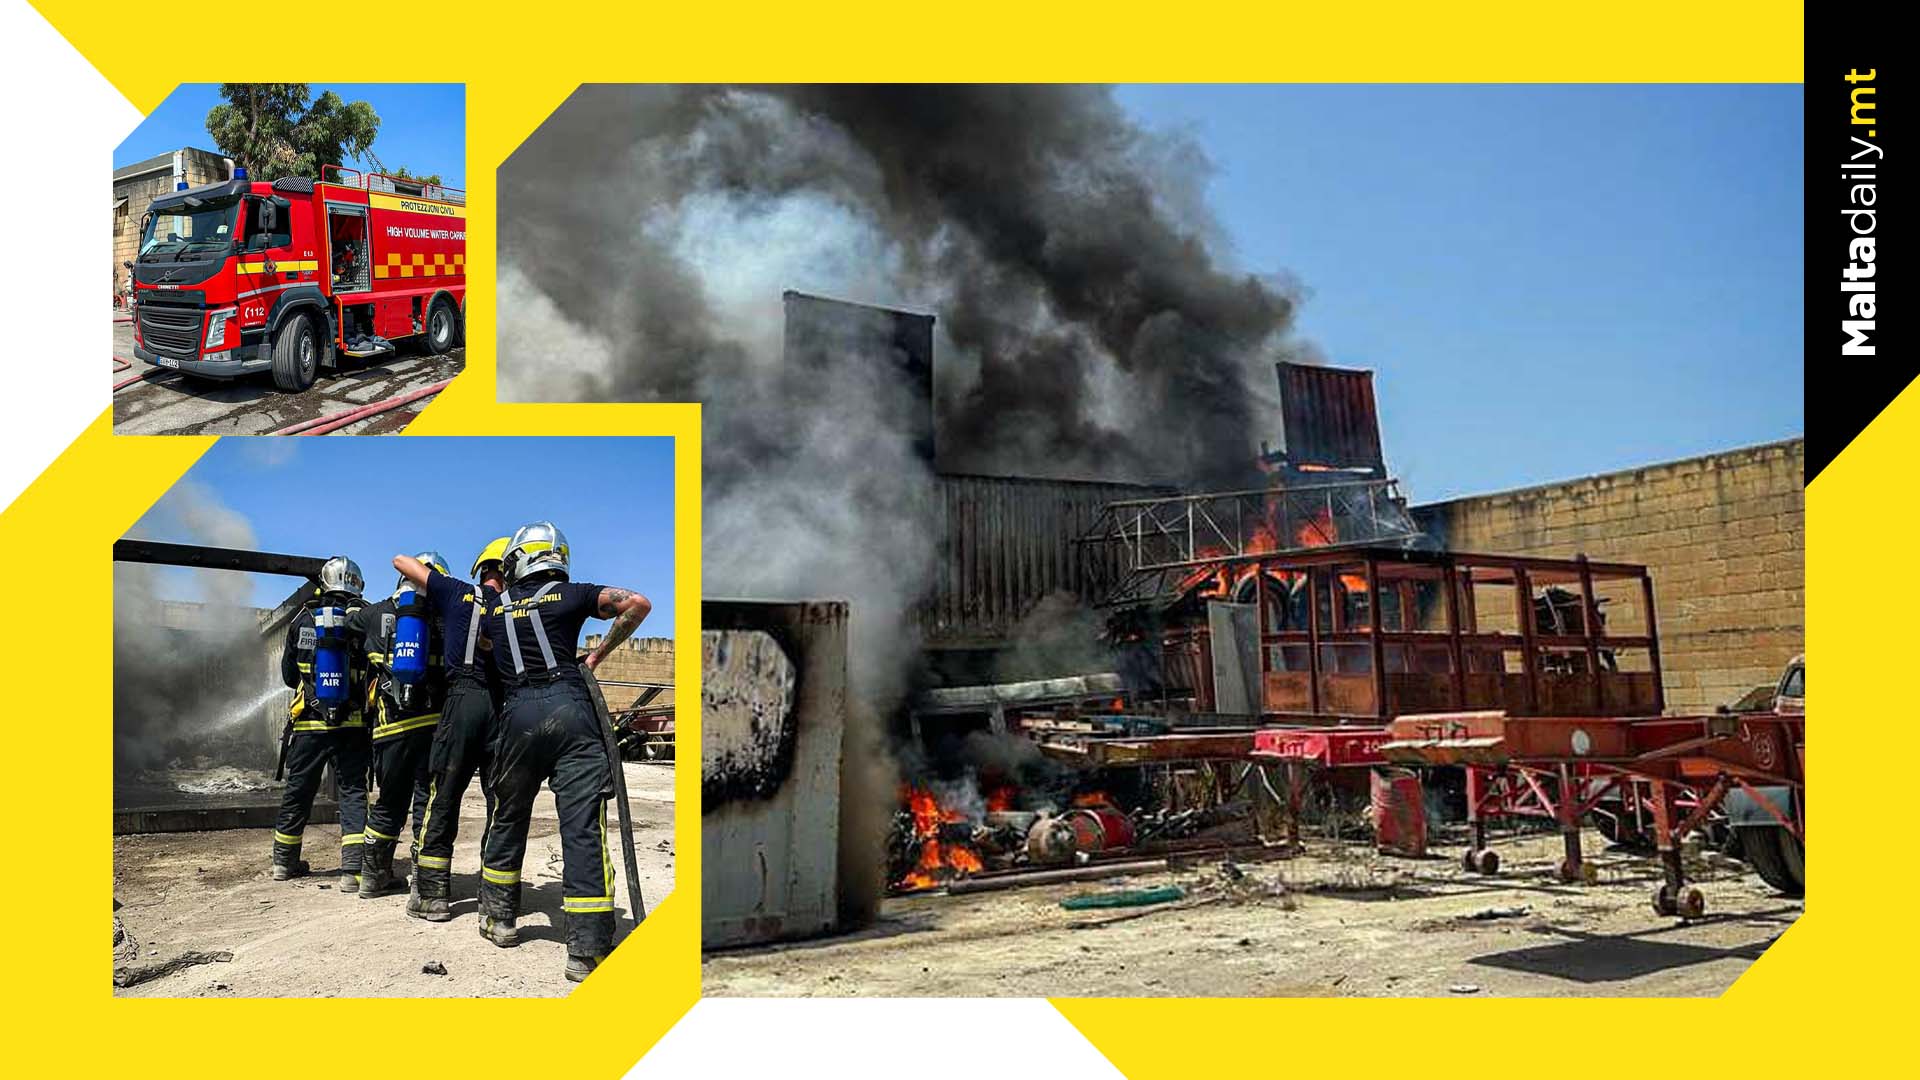 Għaxaq Scrapyard Fire Extinguished In Successful Operation